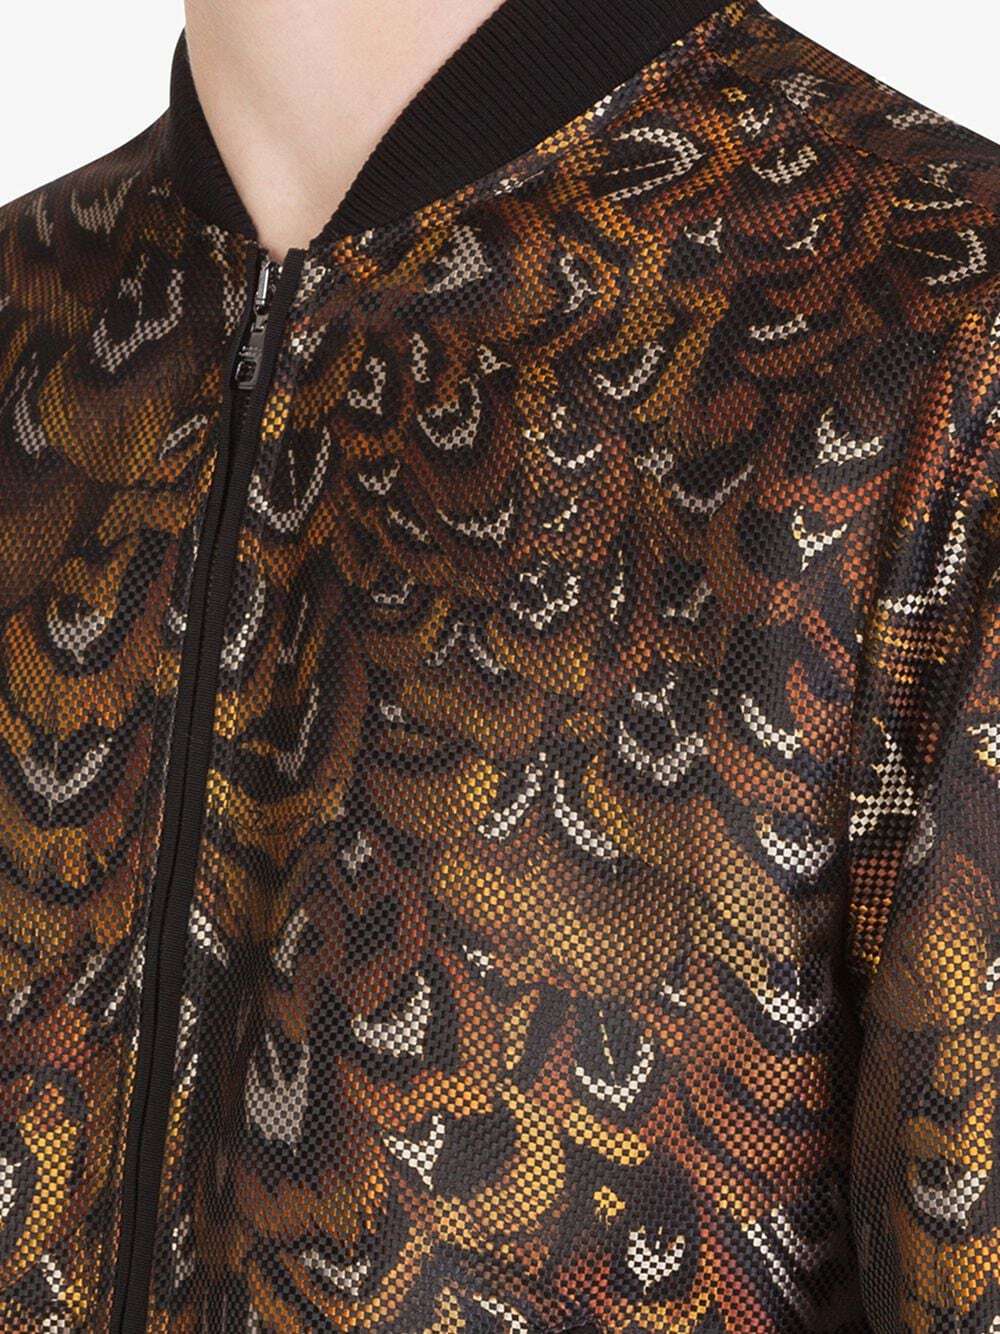 Dolce & Gabbana Feather-Print Bomber Jacket